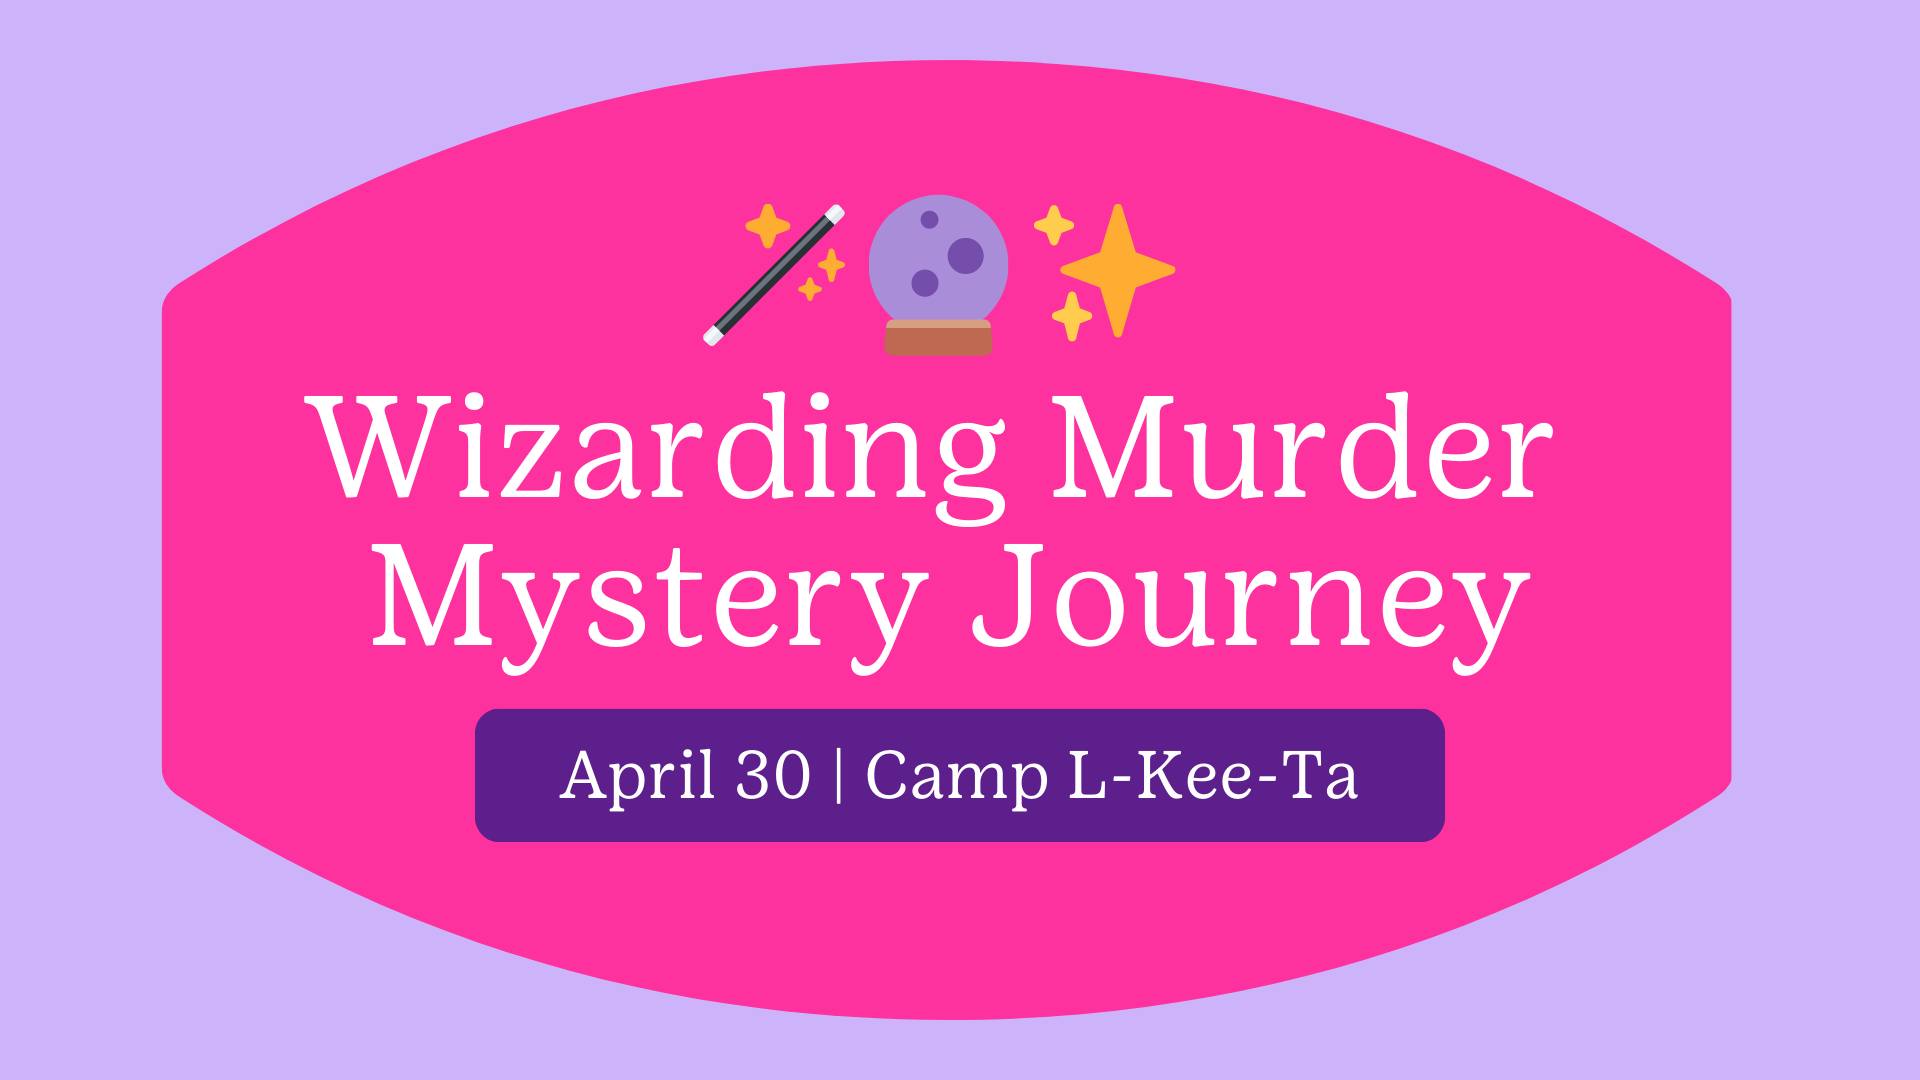 Wizarding Murder Mystery Journey